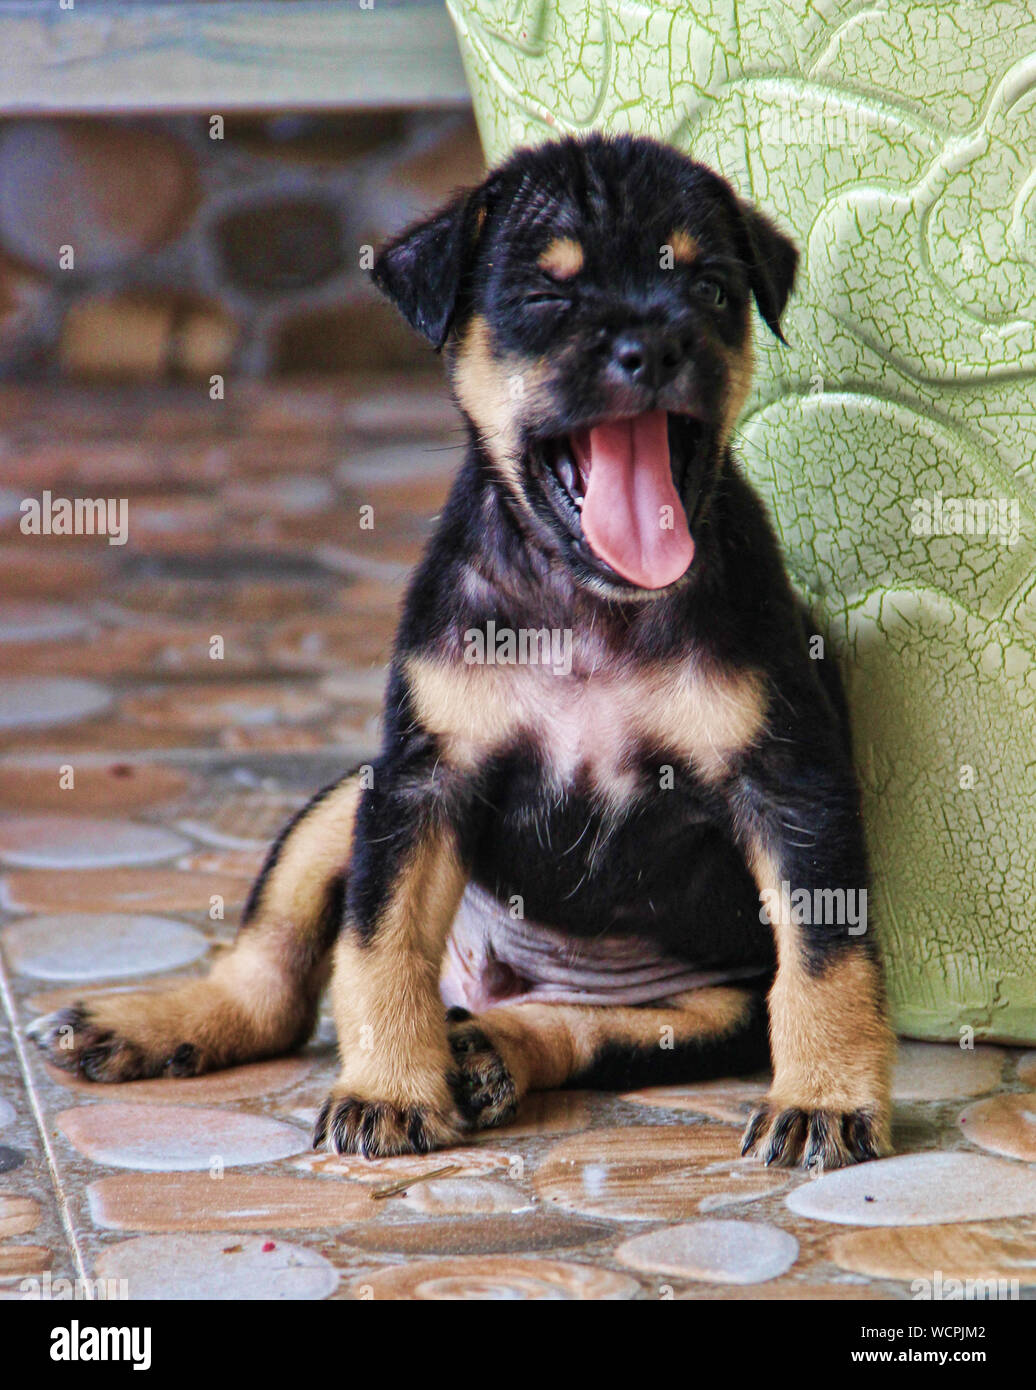 Dog Sitting Down Yawning Stock Photo